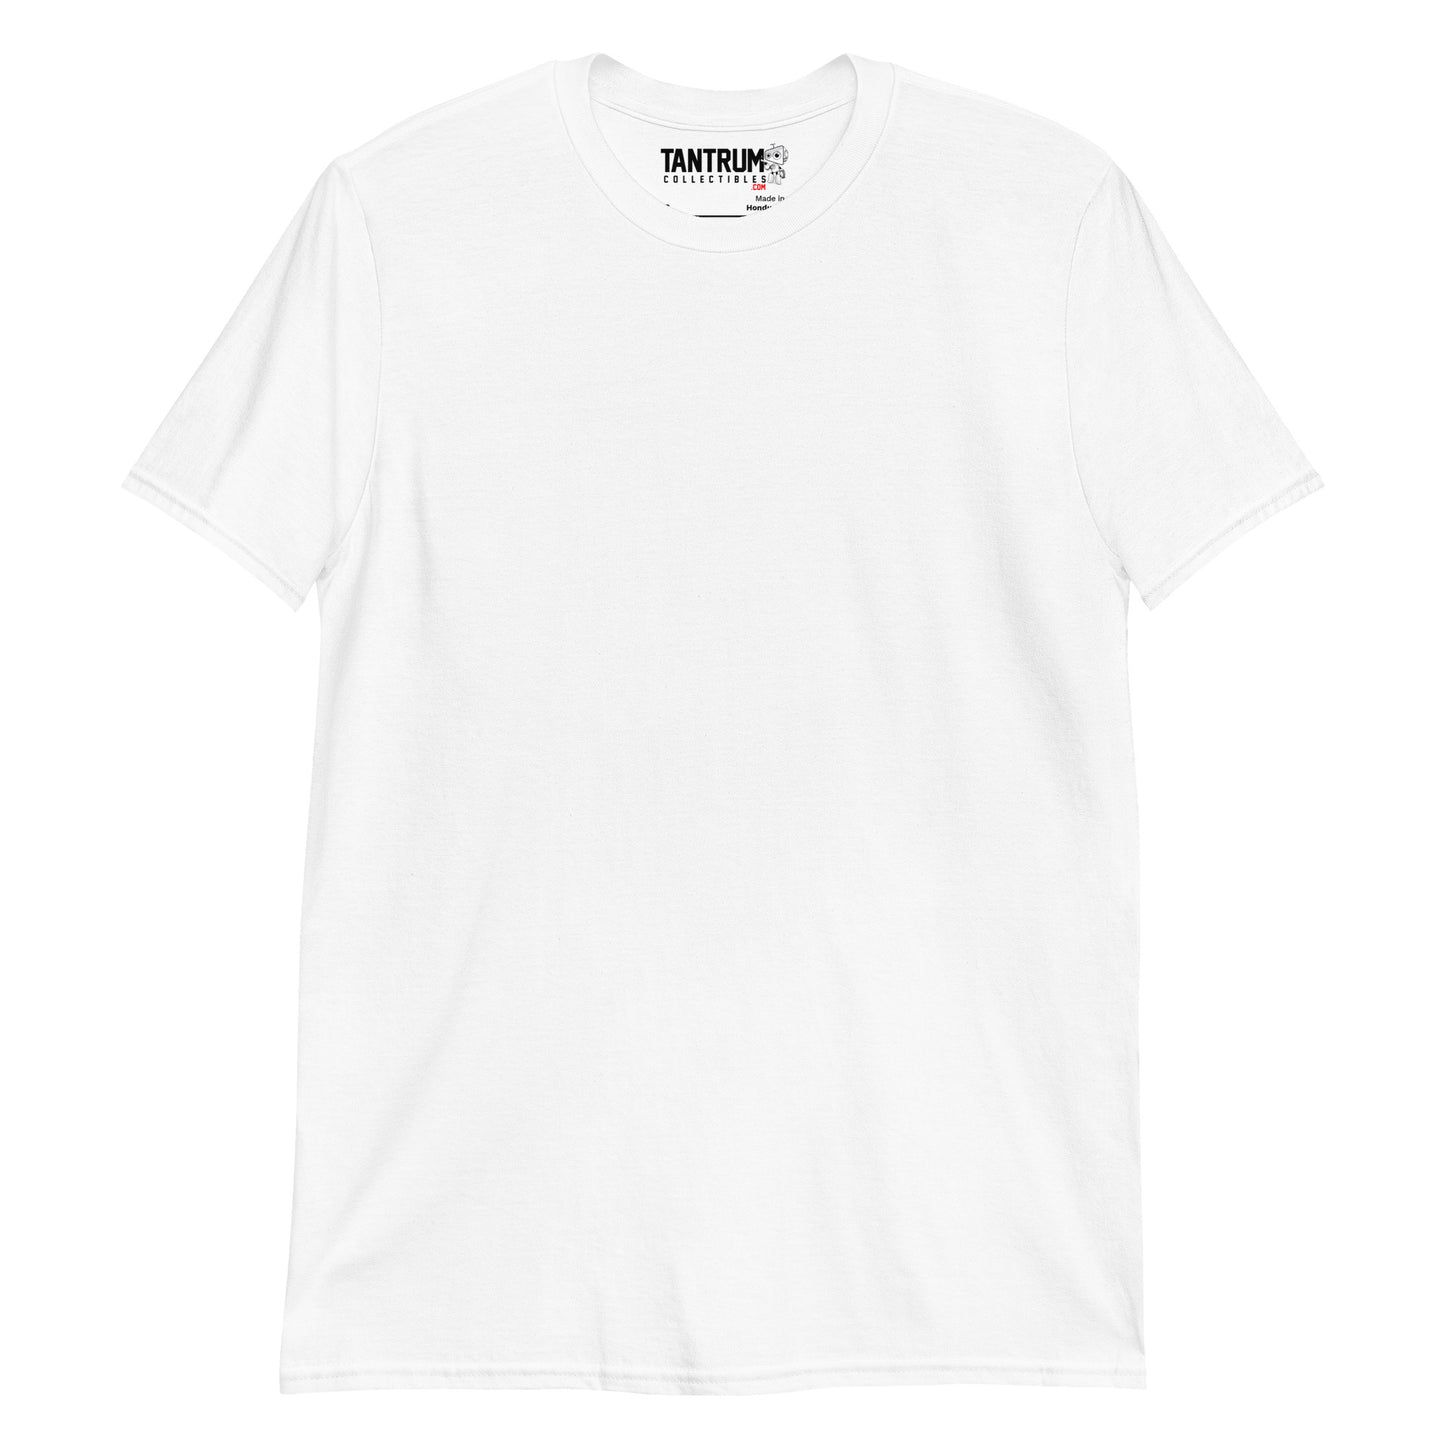 TheDragonFeeney - Unisex T-Shirt - LMAO (Streamer Purchase)